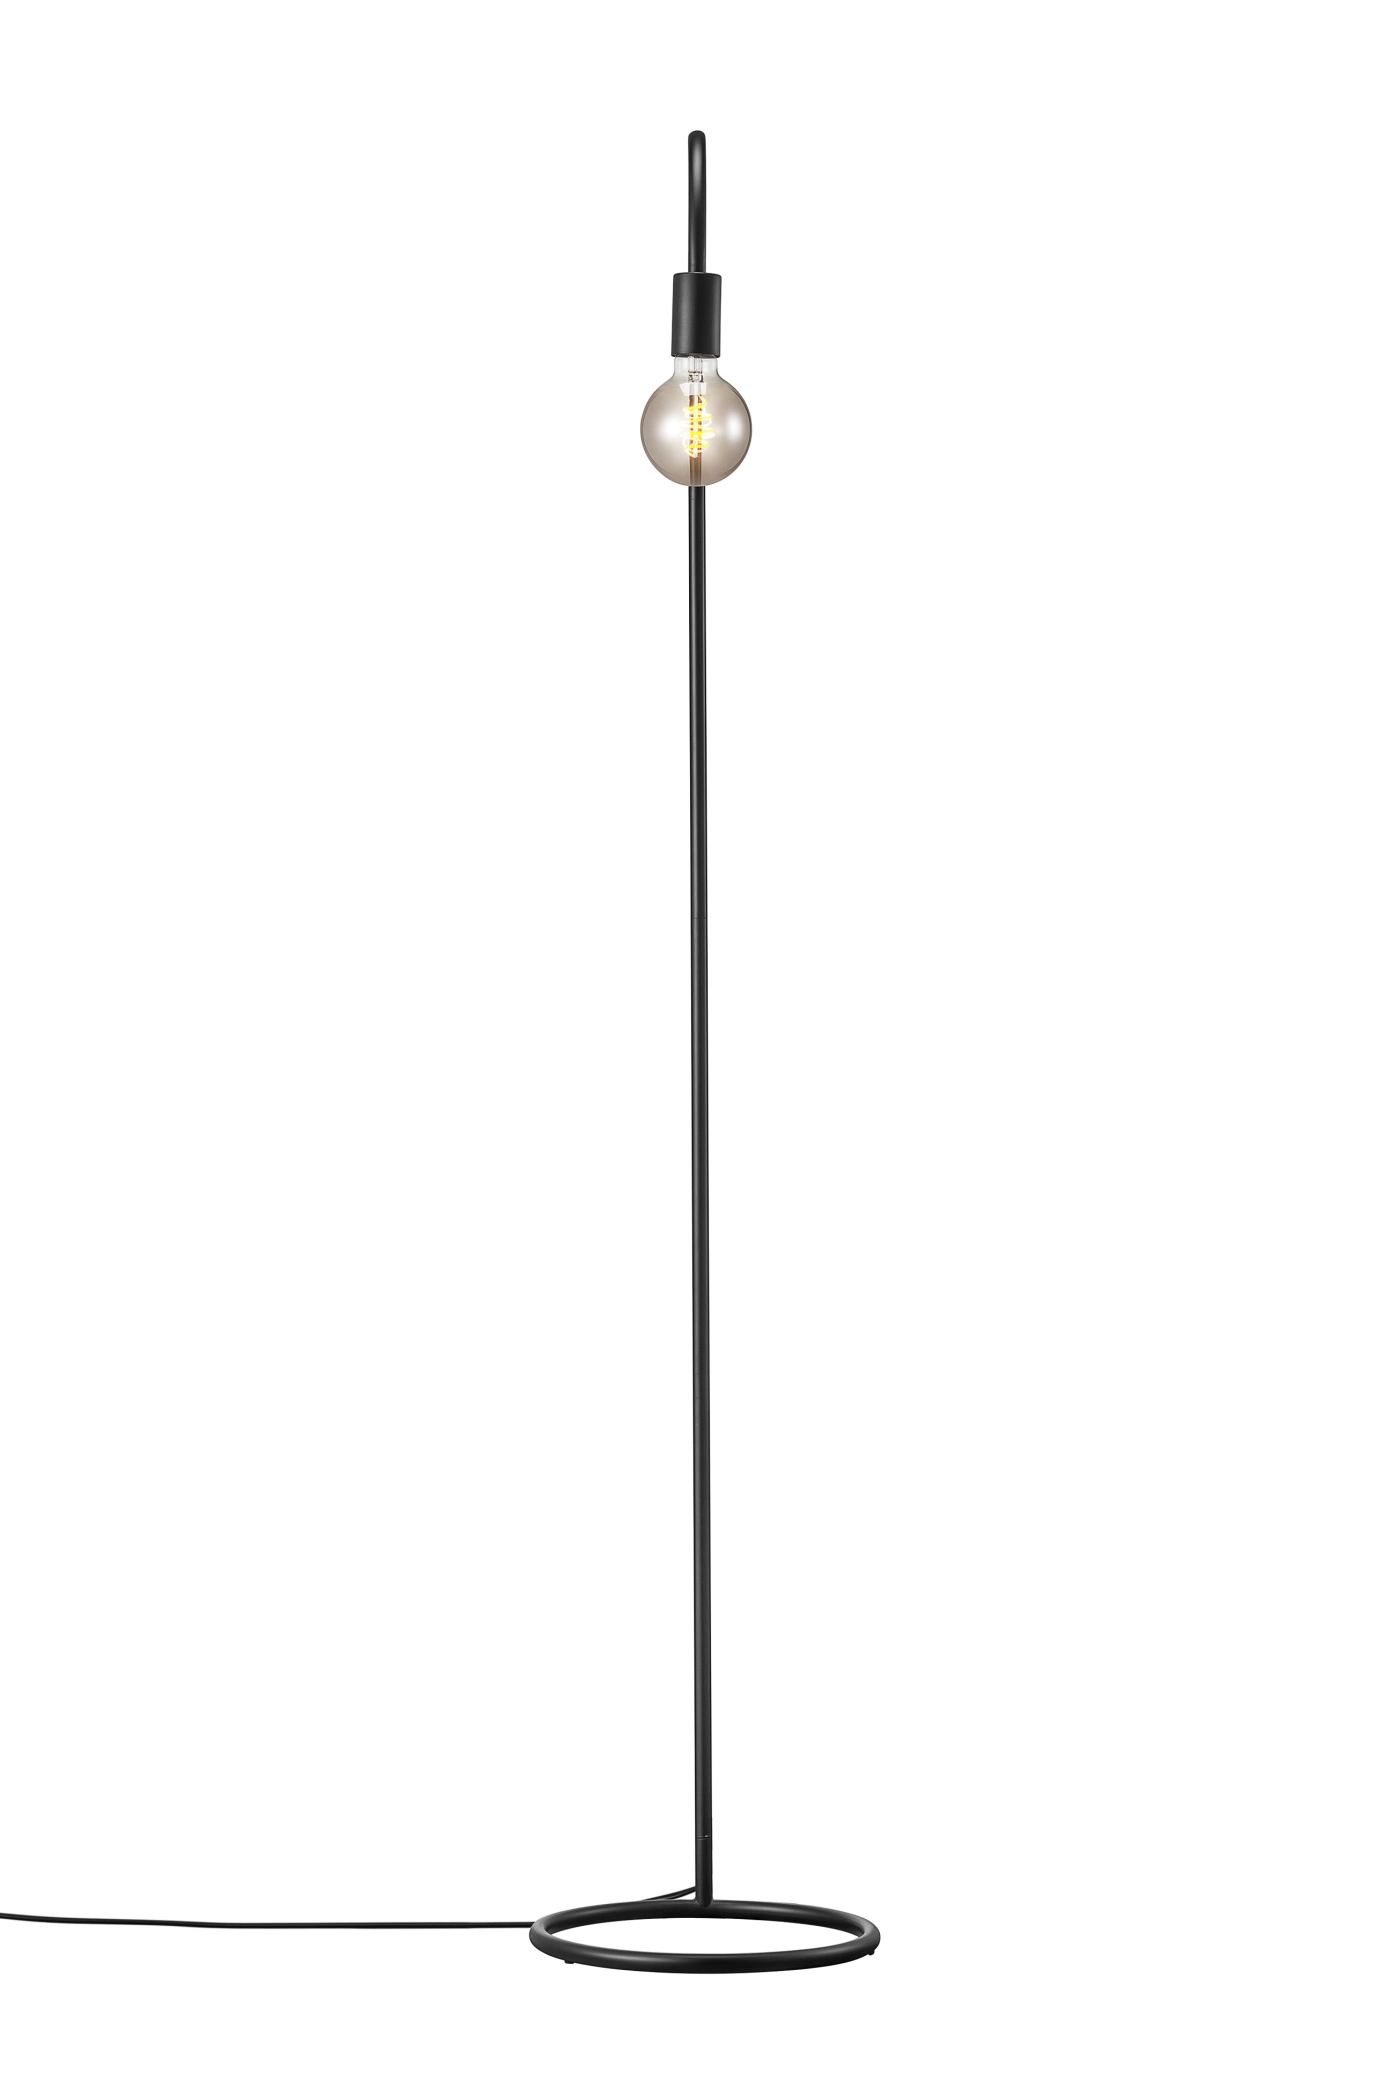   
                        
                        Торшер NORDLUX (Дания) 52478    
                         в стиле Лофт.  
                        Тип источника света: светодиодная лампа, сменная.                                                                                                  фото 3